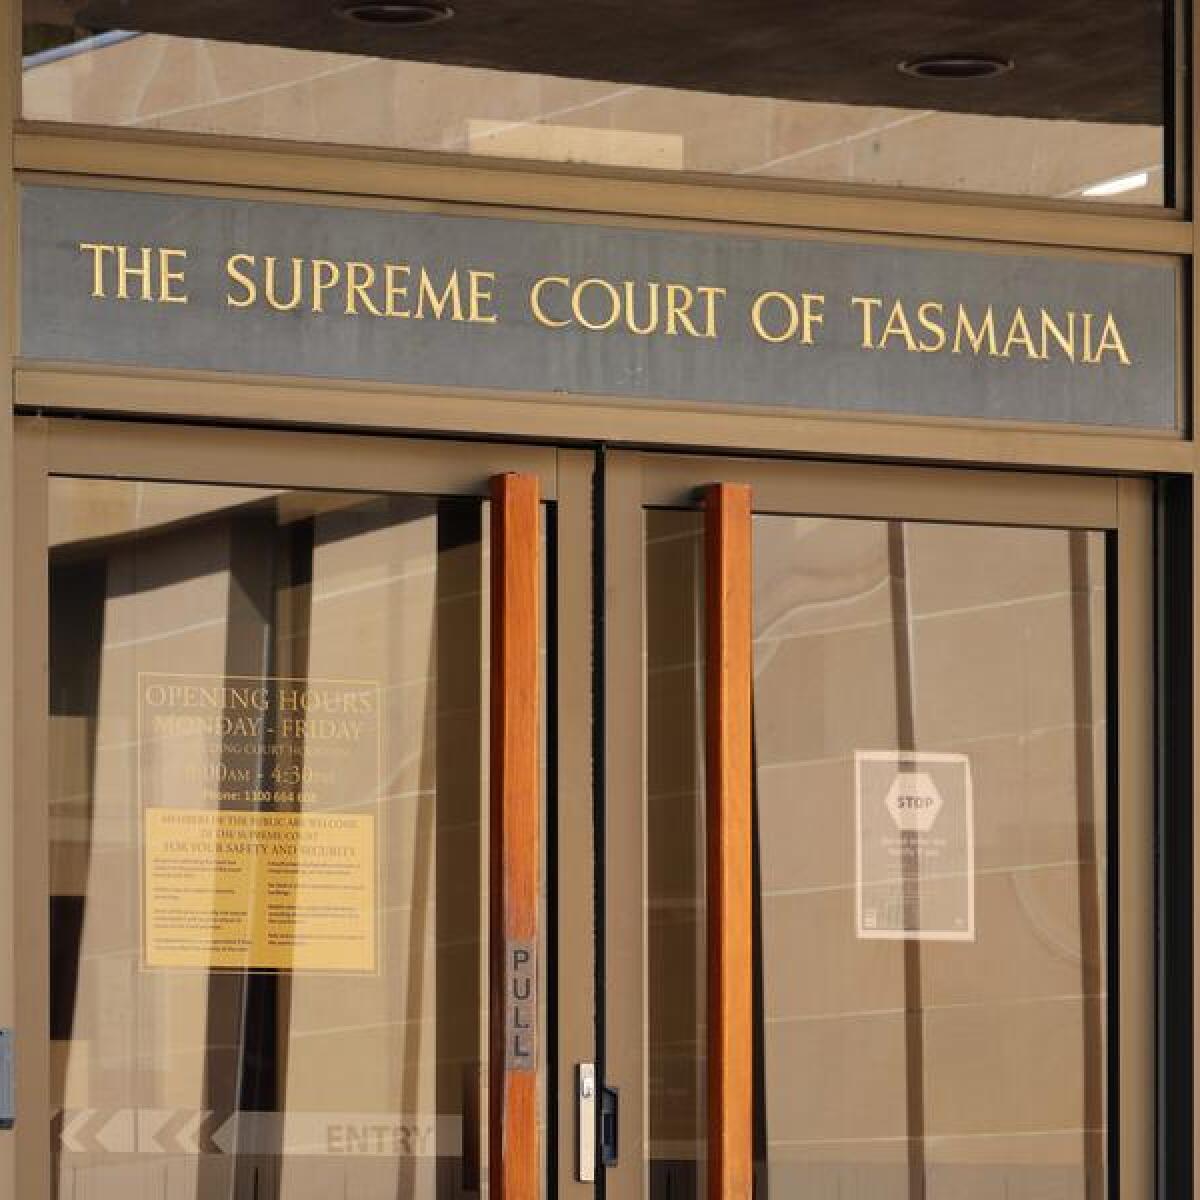 Supreme Court of Tasmania signage (file image)